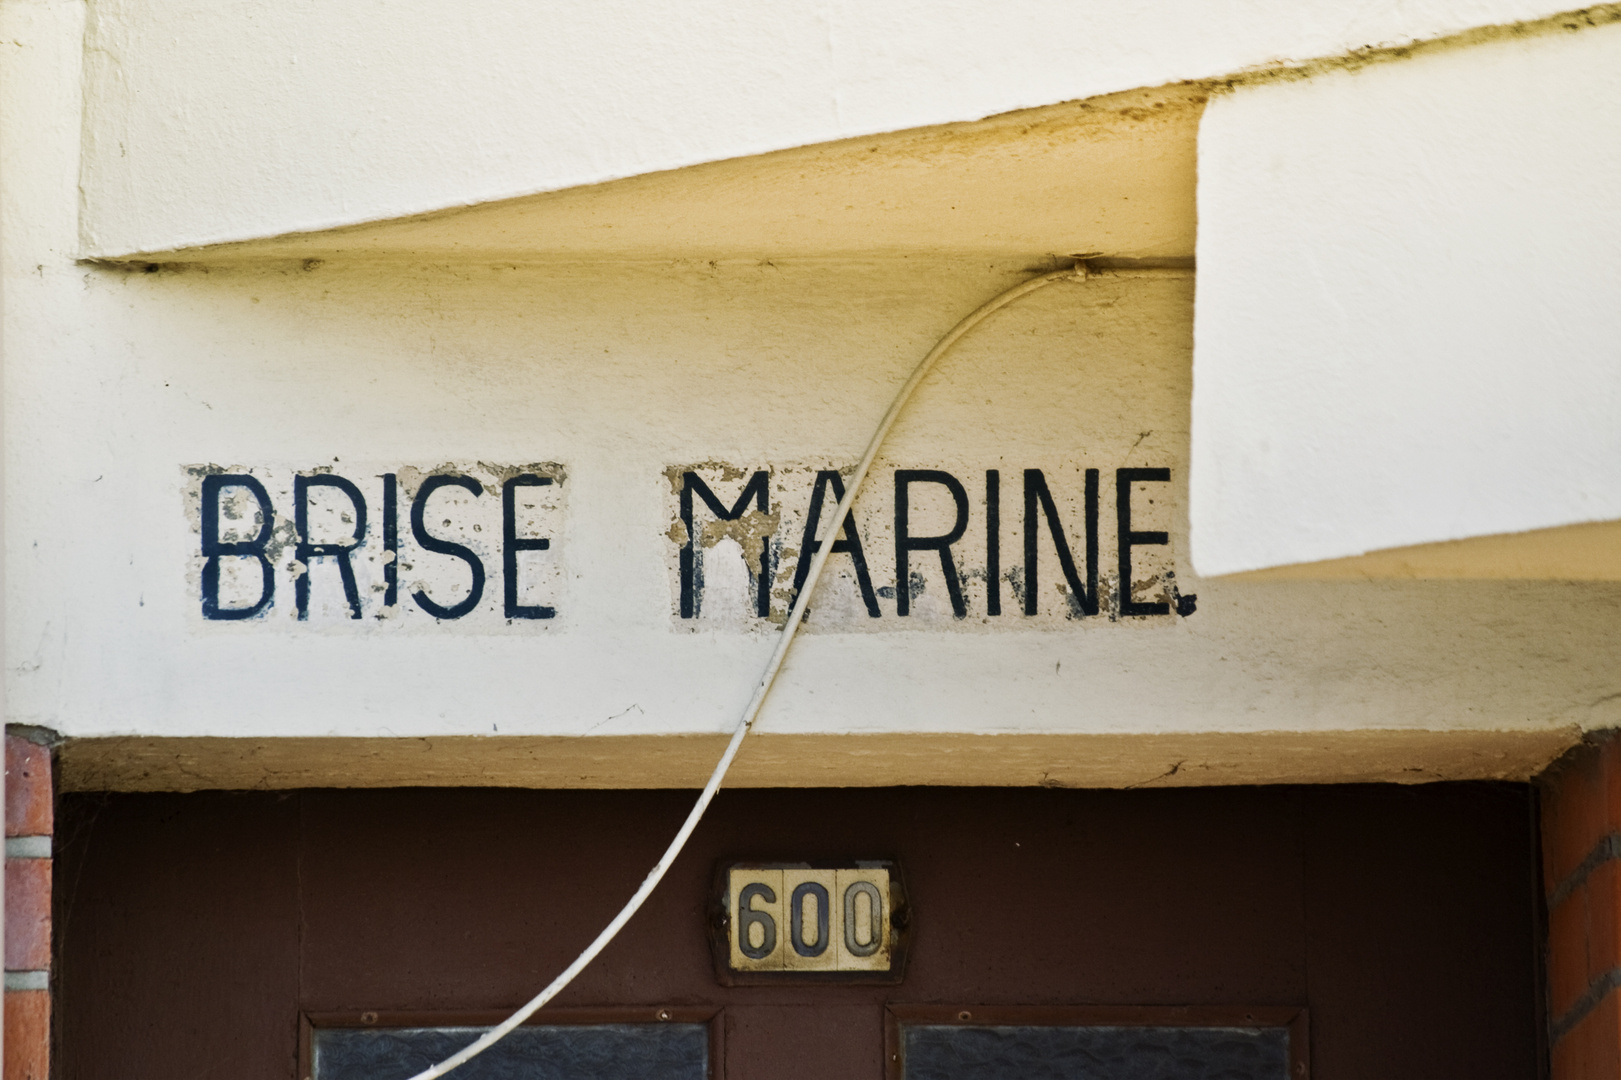 Brise Marine